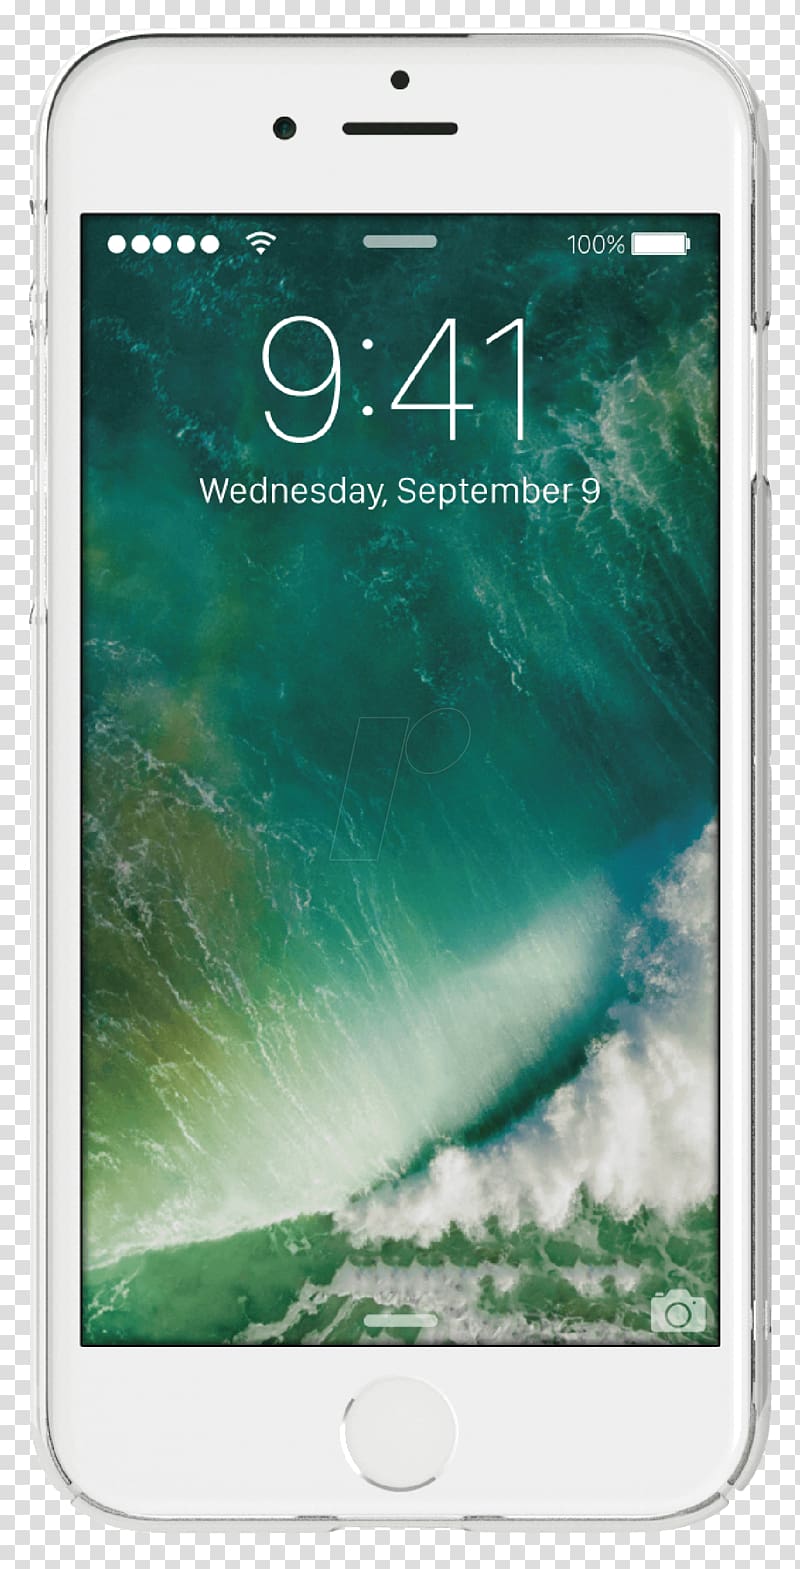 iPhone 7 Plus iPhone 8 iOS 10 iOS 11, iphone7 transparent background PNG clipart